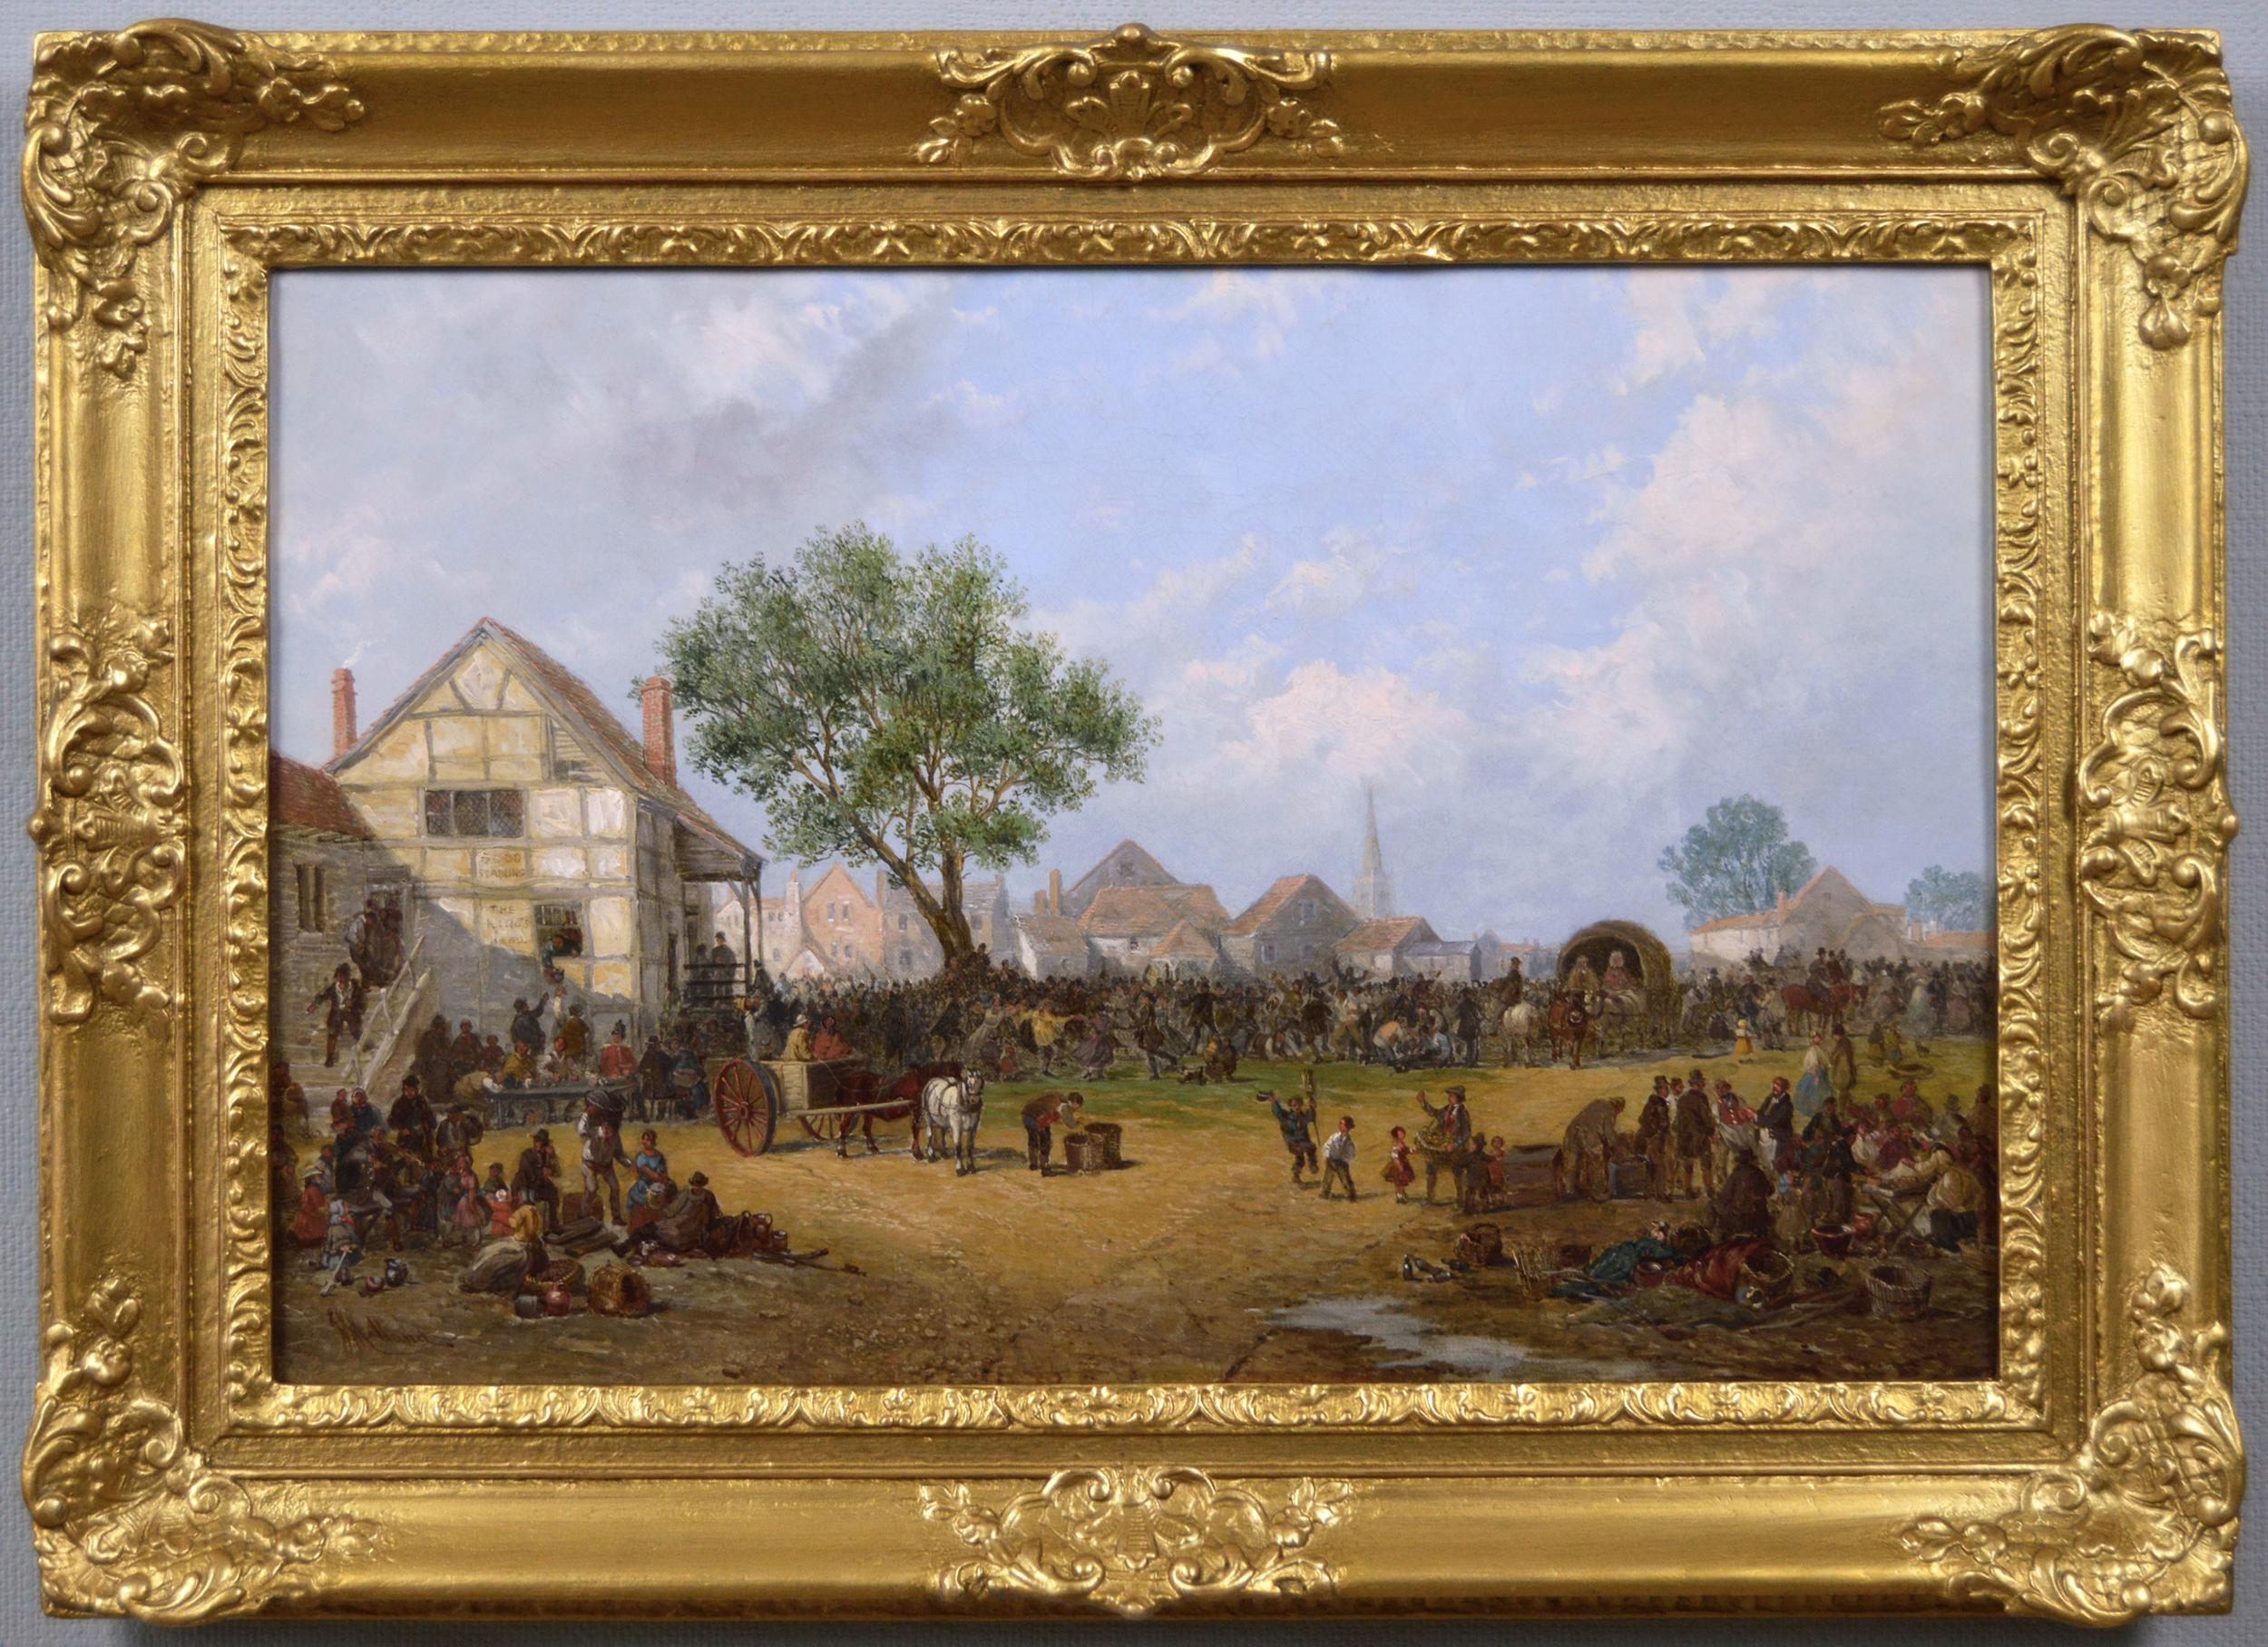 19th century landscape oil painting of a village fair